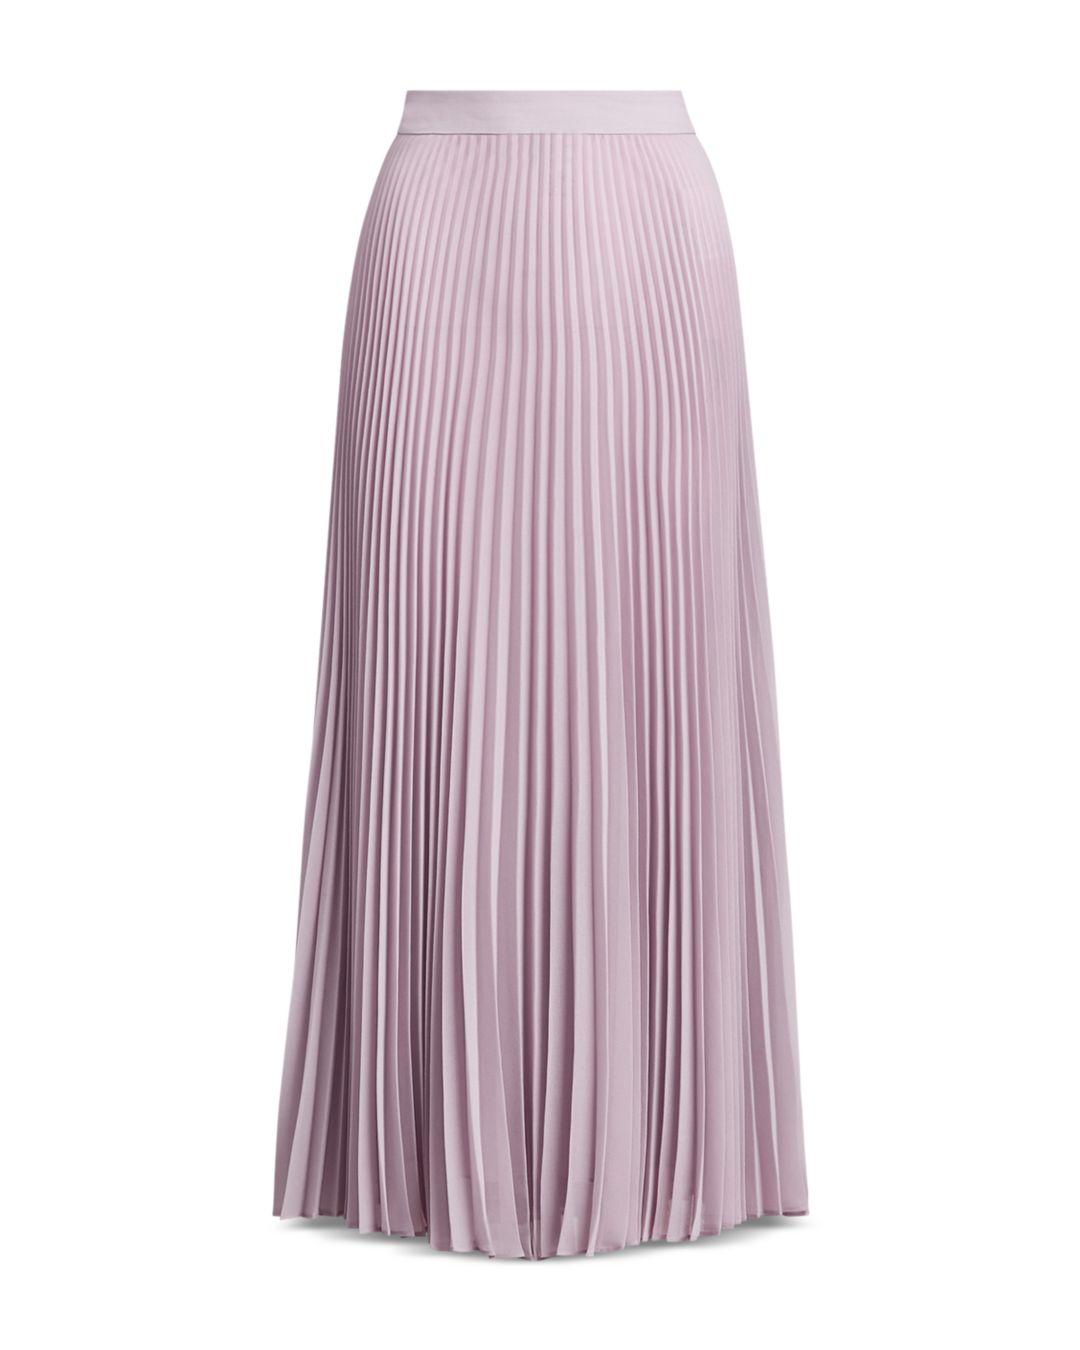 Ralph Lauren Synthetic Lauren Pleated Maxi Skirt in Dusty Lilac 